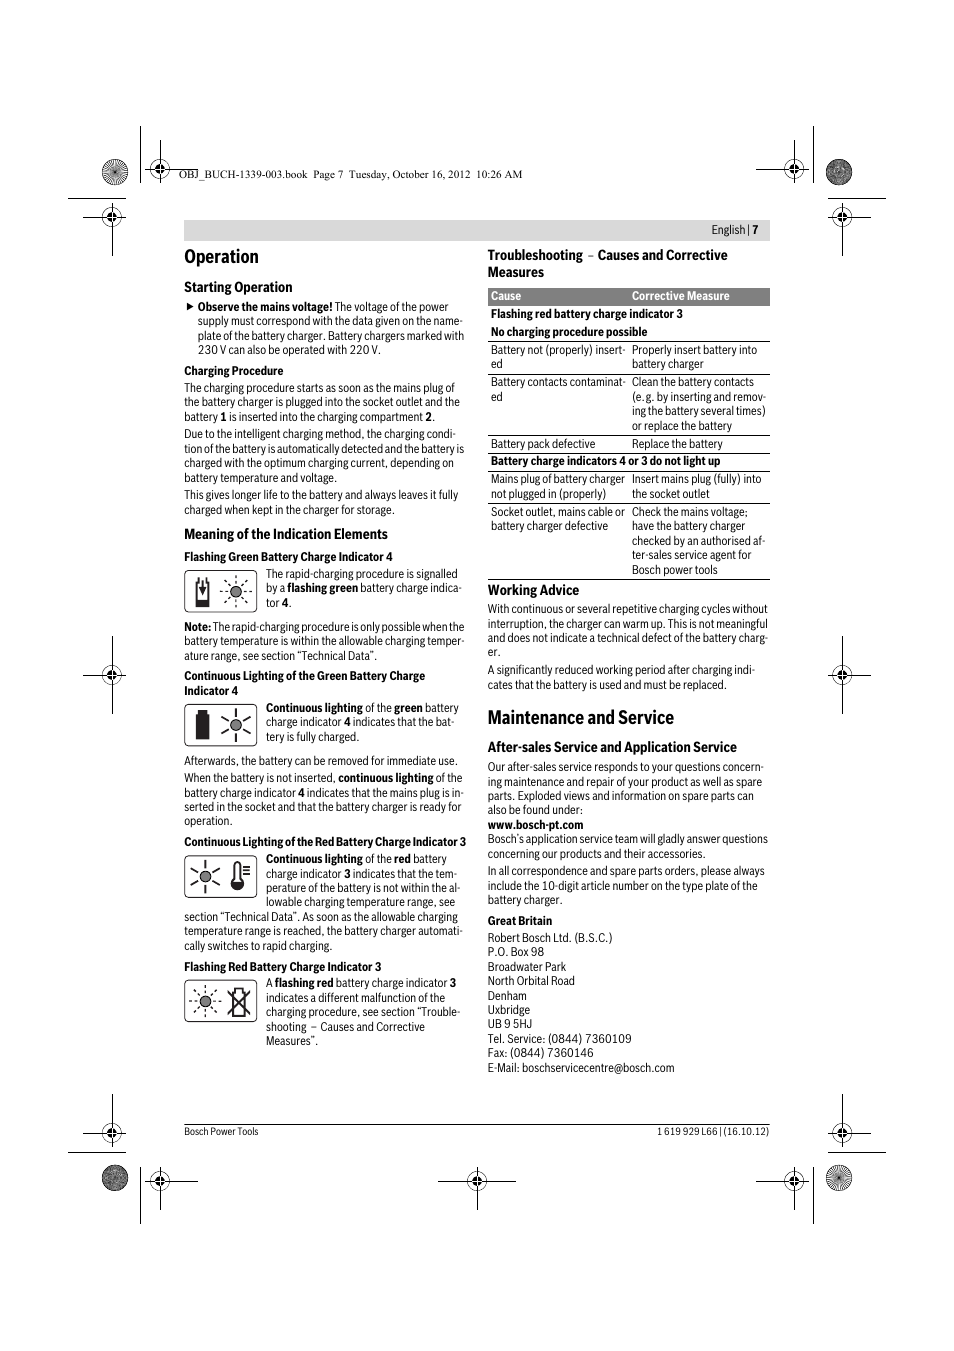 Operation, Maintenance and service | Bosch AL 1130 CV User Manual | Page 7  / 65 | Original mode